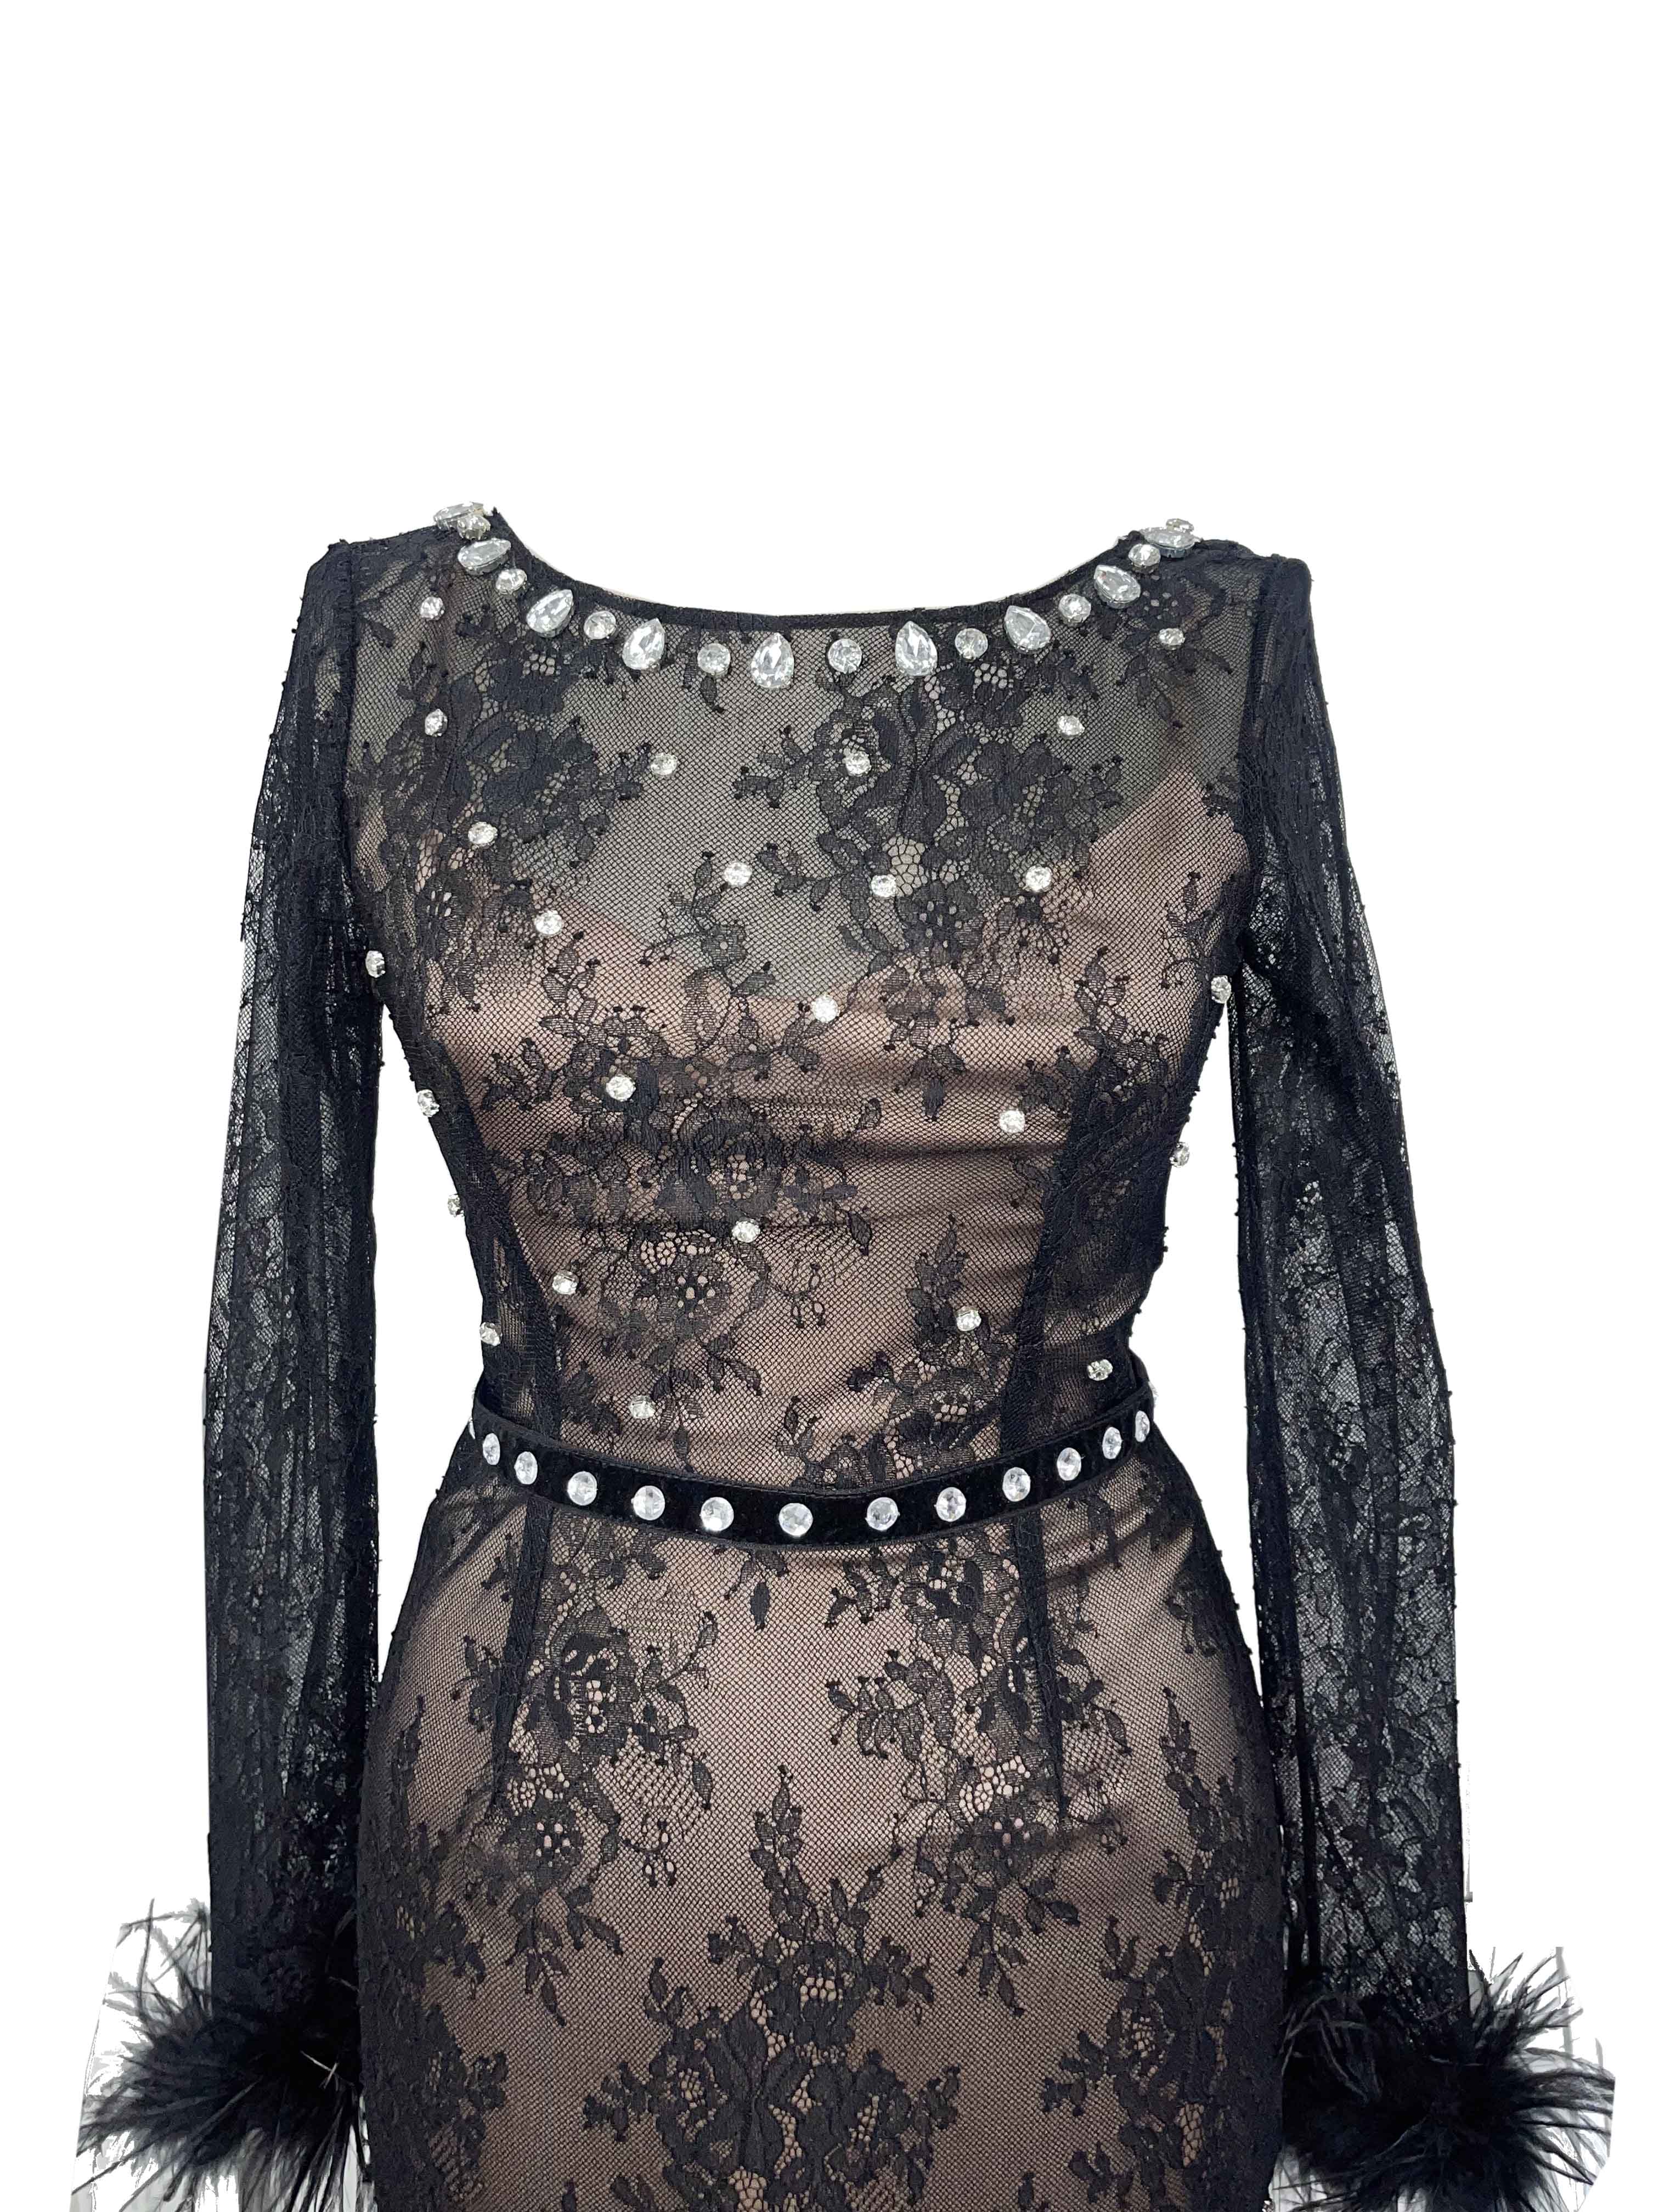 R24120 - BLACK 01 - CASANDRA black lace mini dress with feathers and crystals - ambar studio